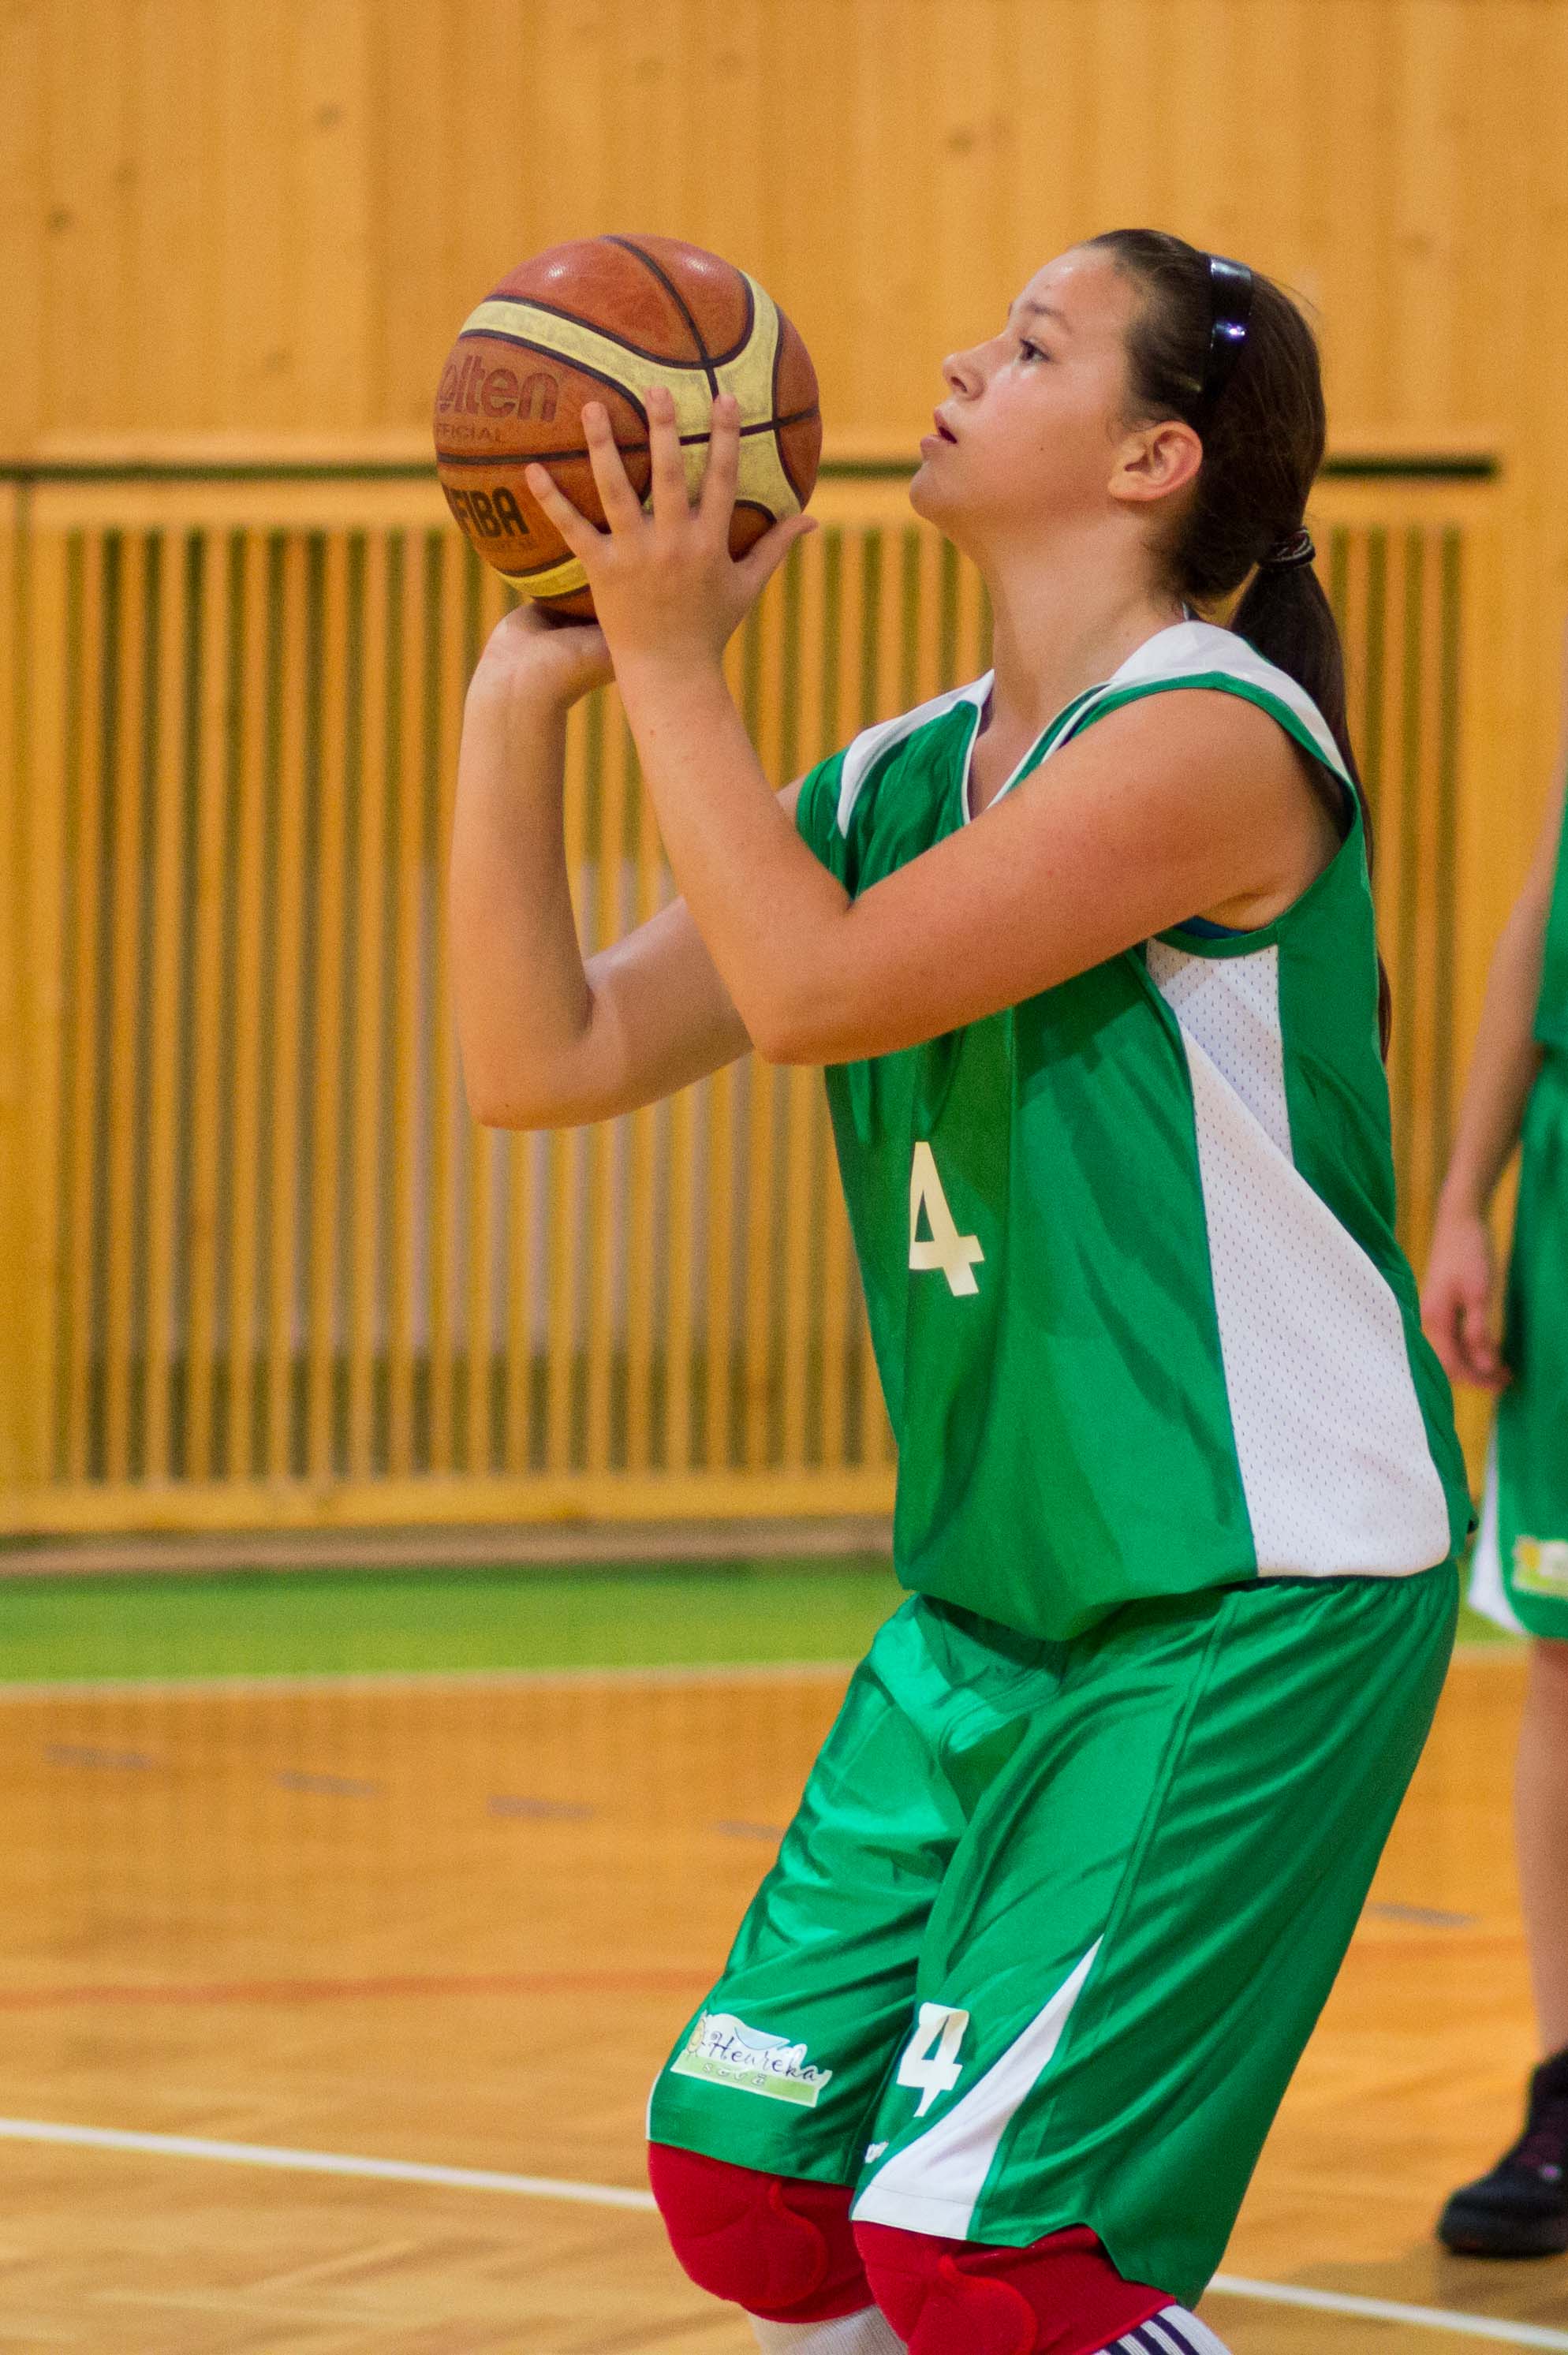 bk-zvolen-handlova-ziacky-2012-basketbal-19